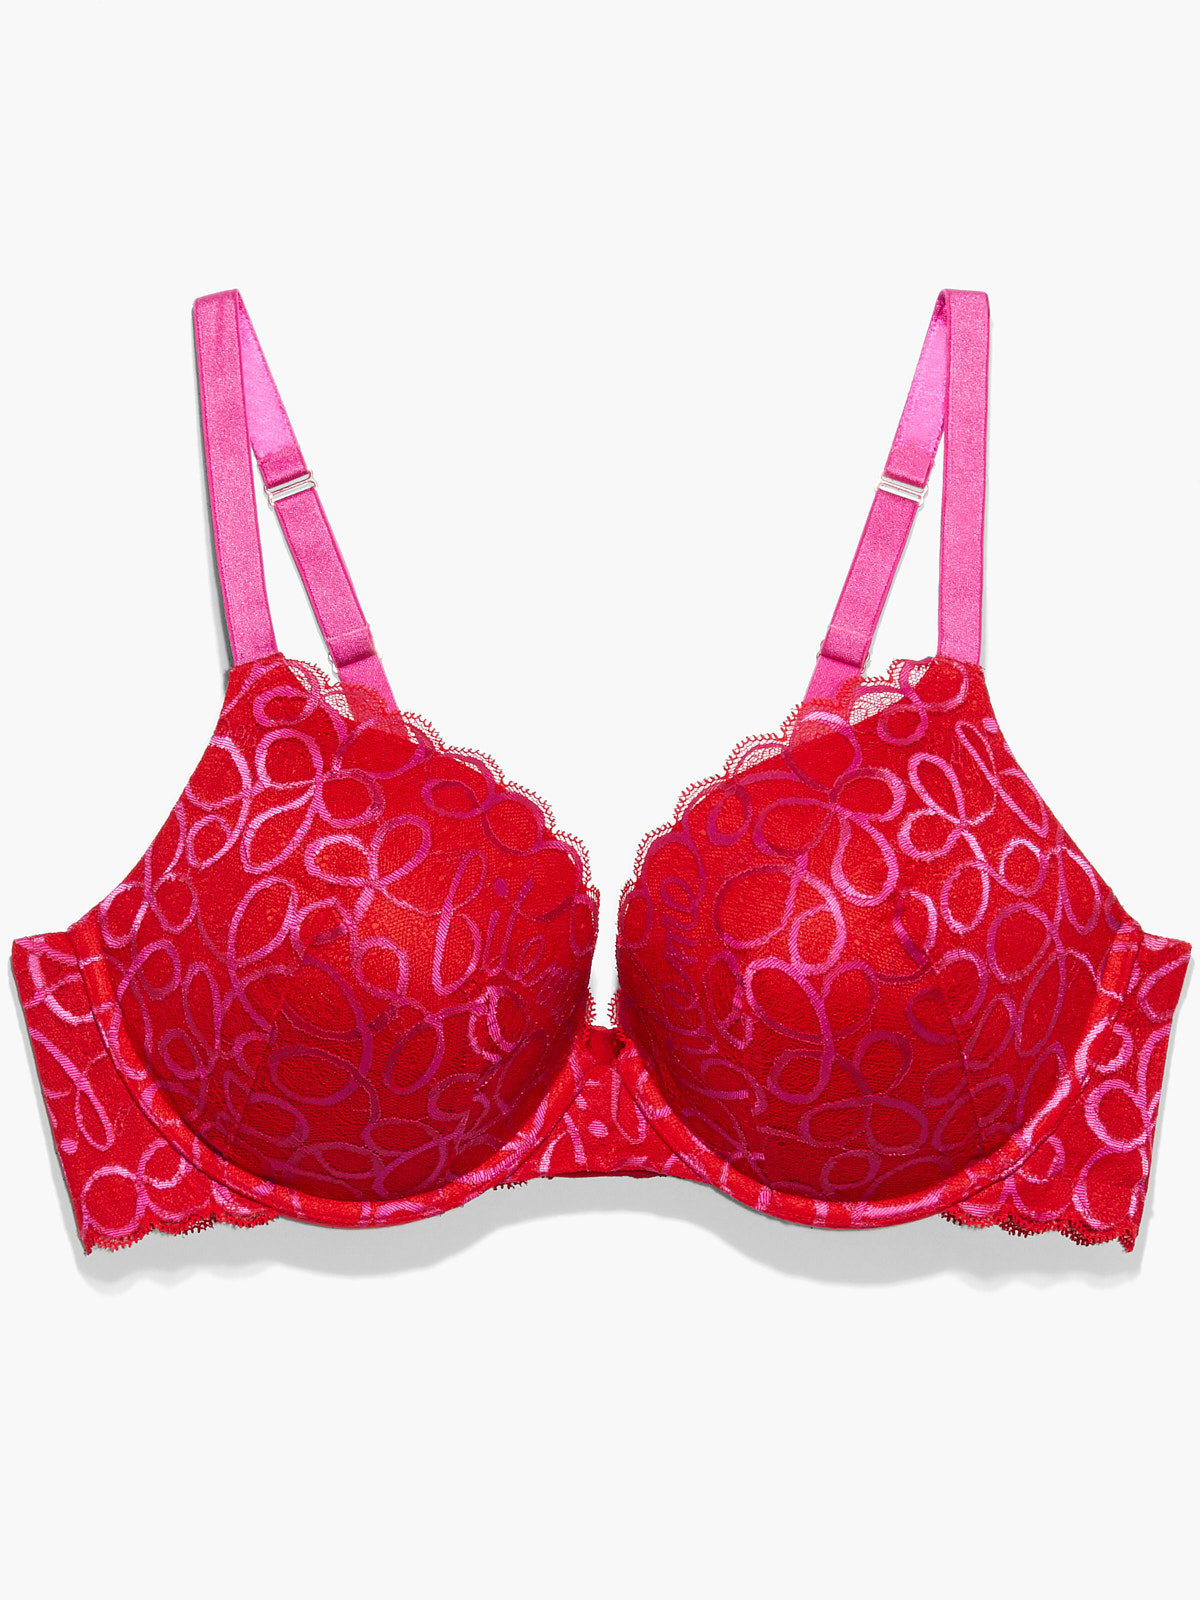 SAVAGE X FENTY red and pink lacy underwire bra size 32DDD/32F